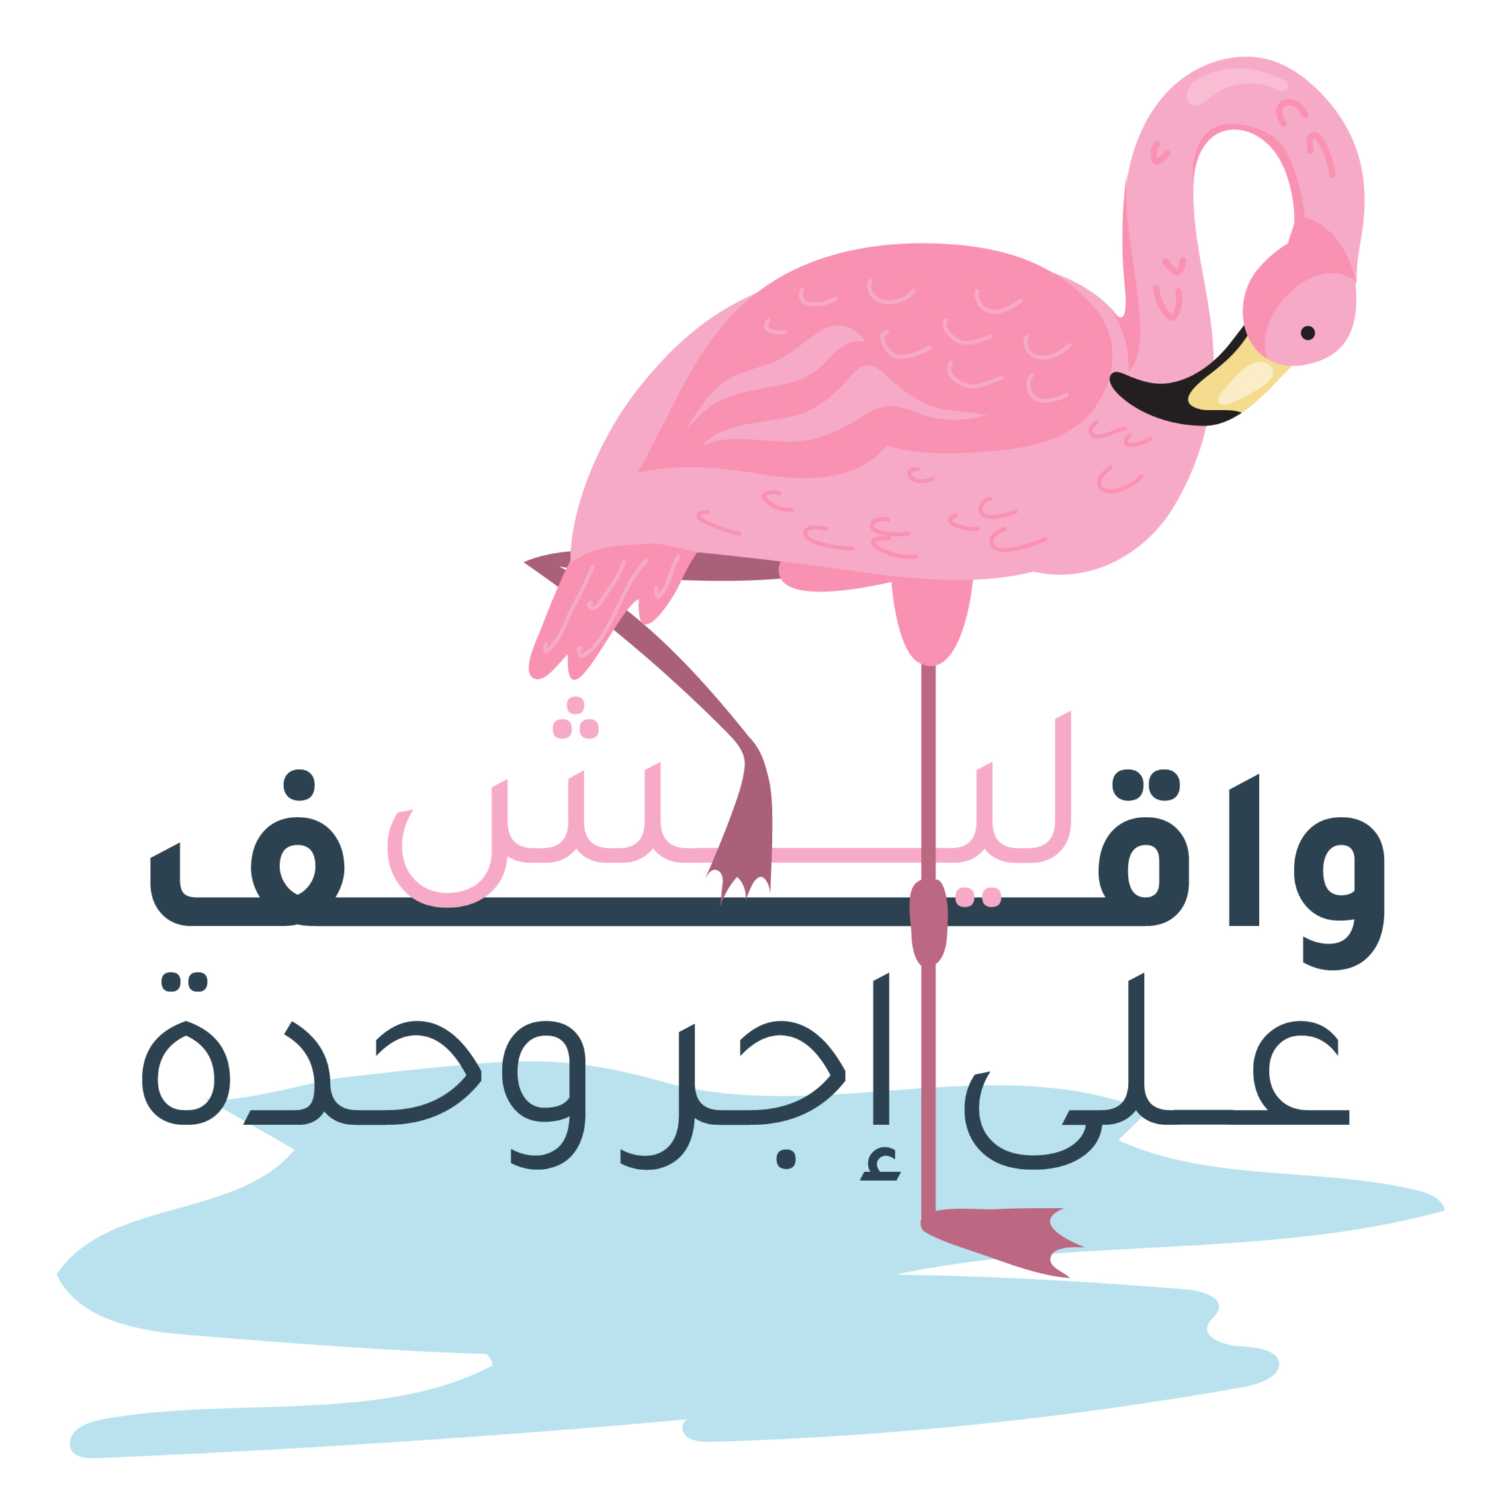 ليش الفلامينغو بيوقف على اجر وحدة؟ Why does the flamingo stand on one leg?